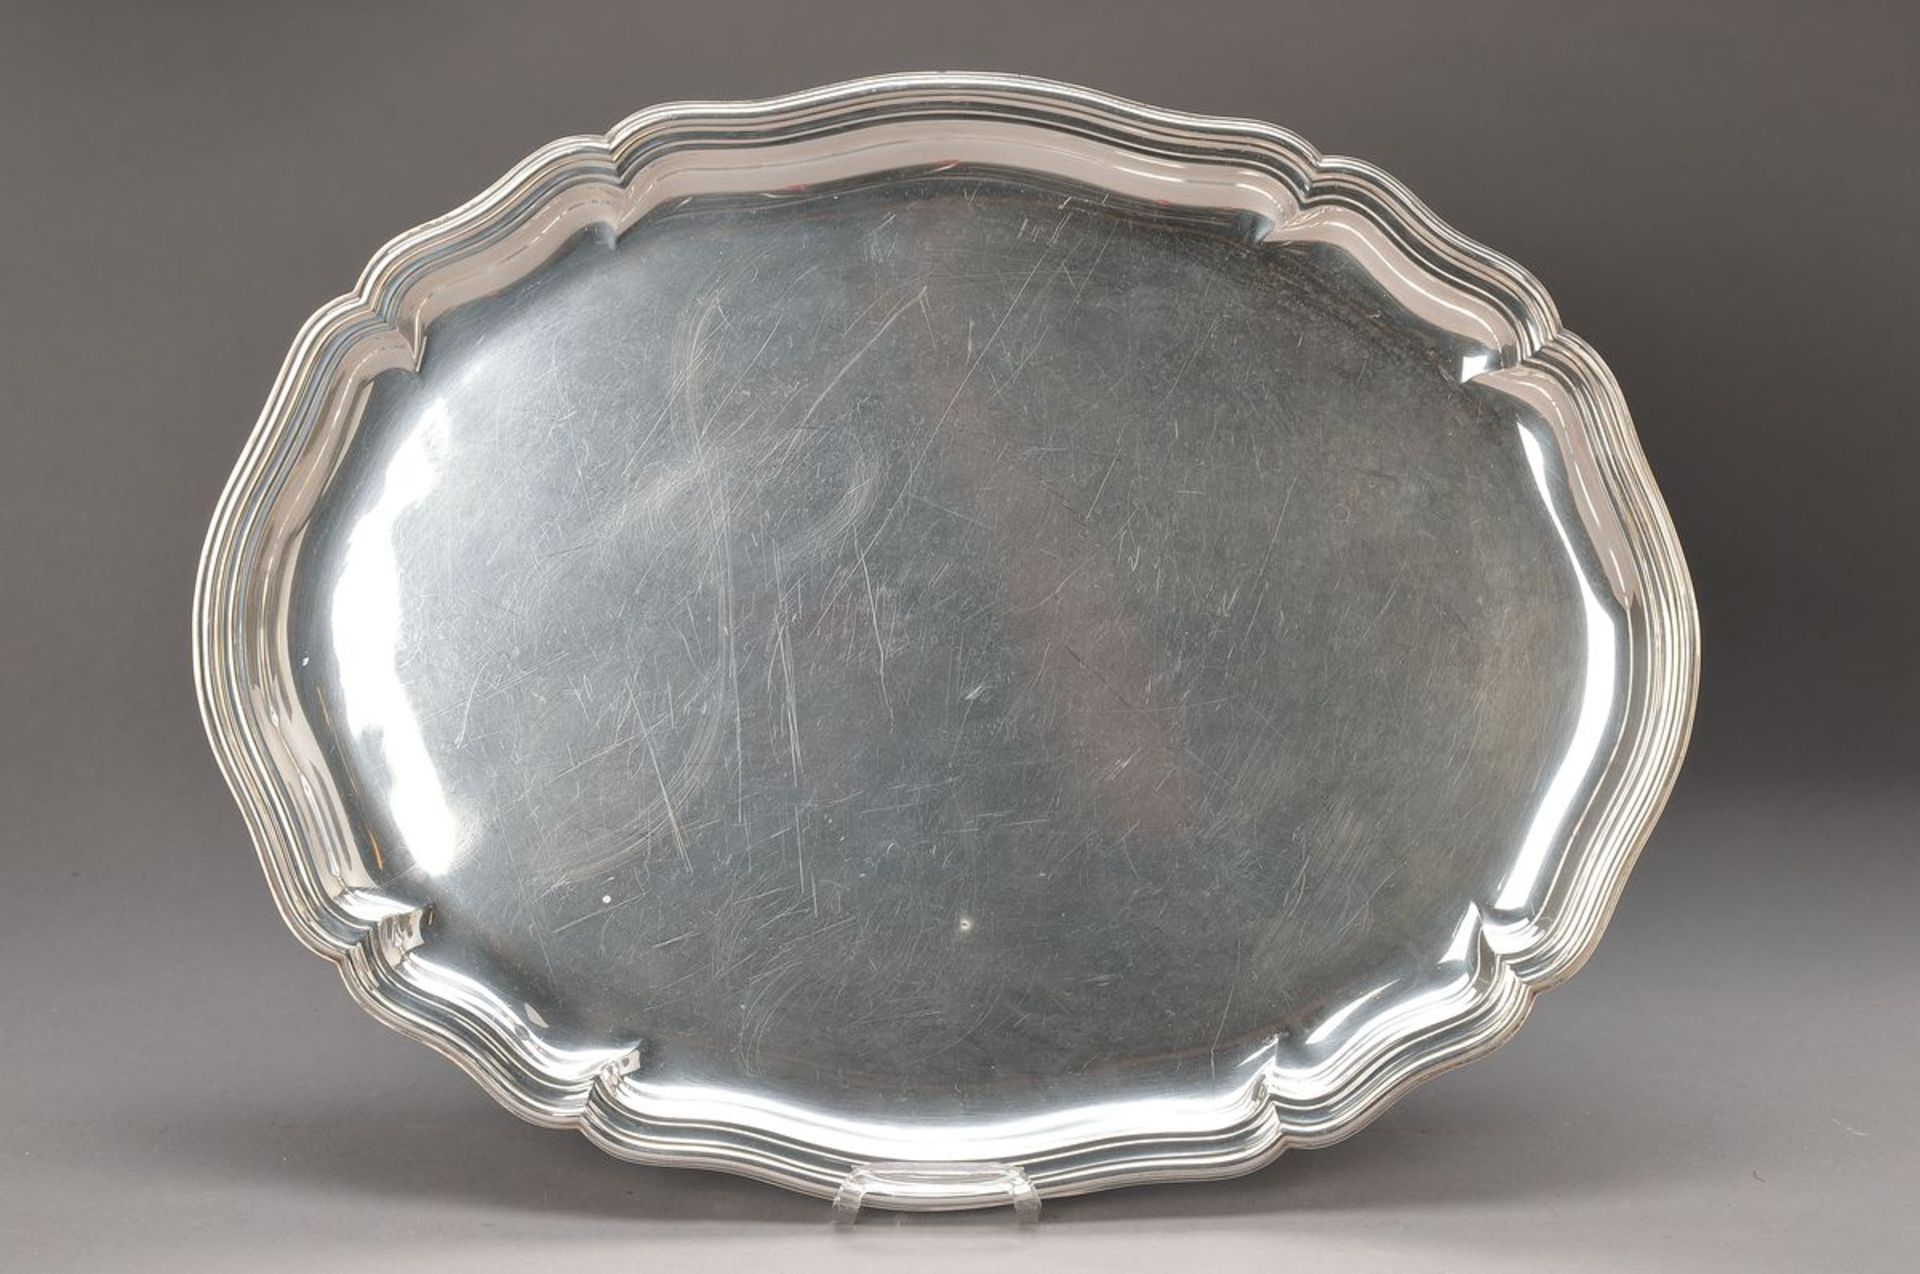 Ovales Tablett, deutsch, 1960er Jahre, 835er Silber, Barockstil, ca. 45x35cm, ca. 945 gOvale tray,